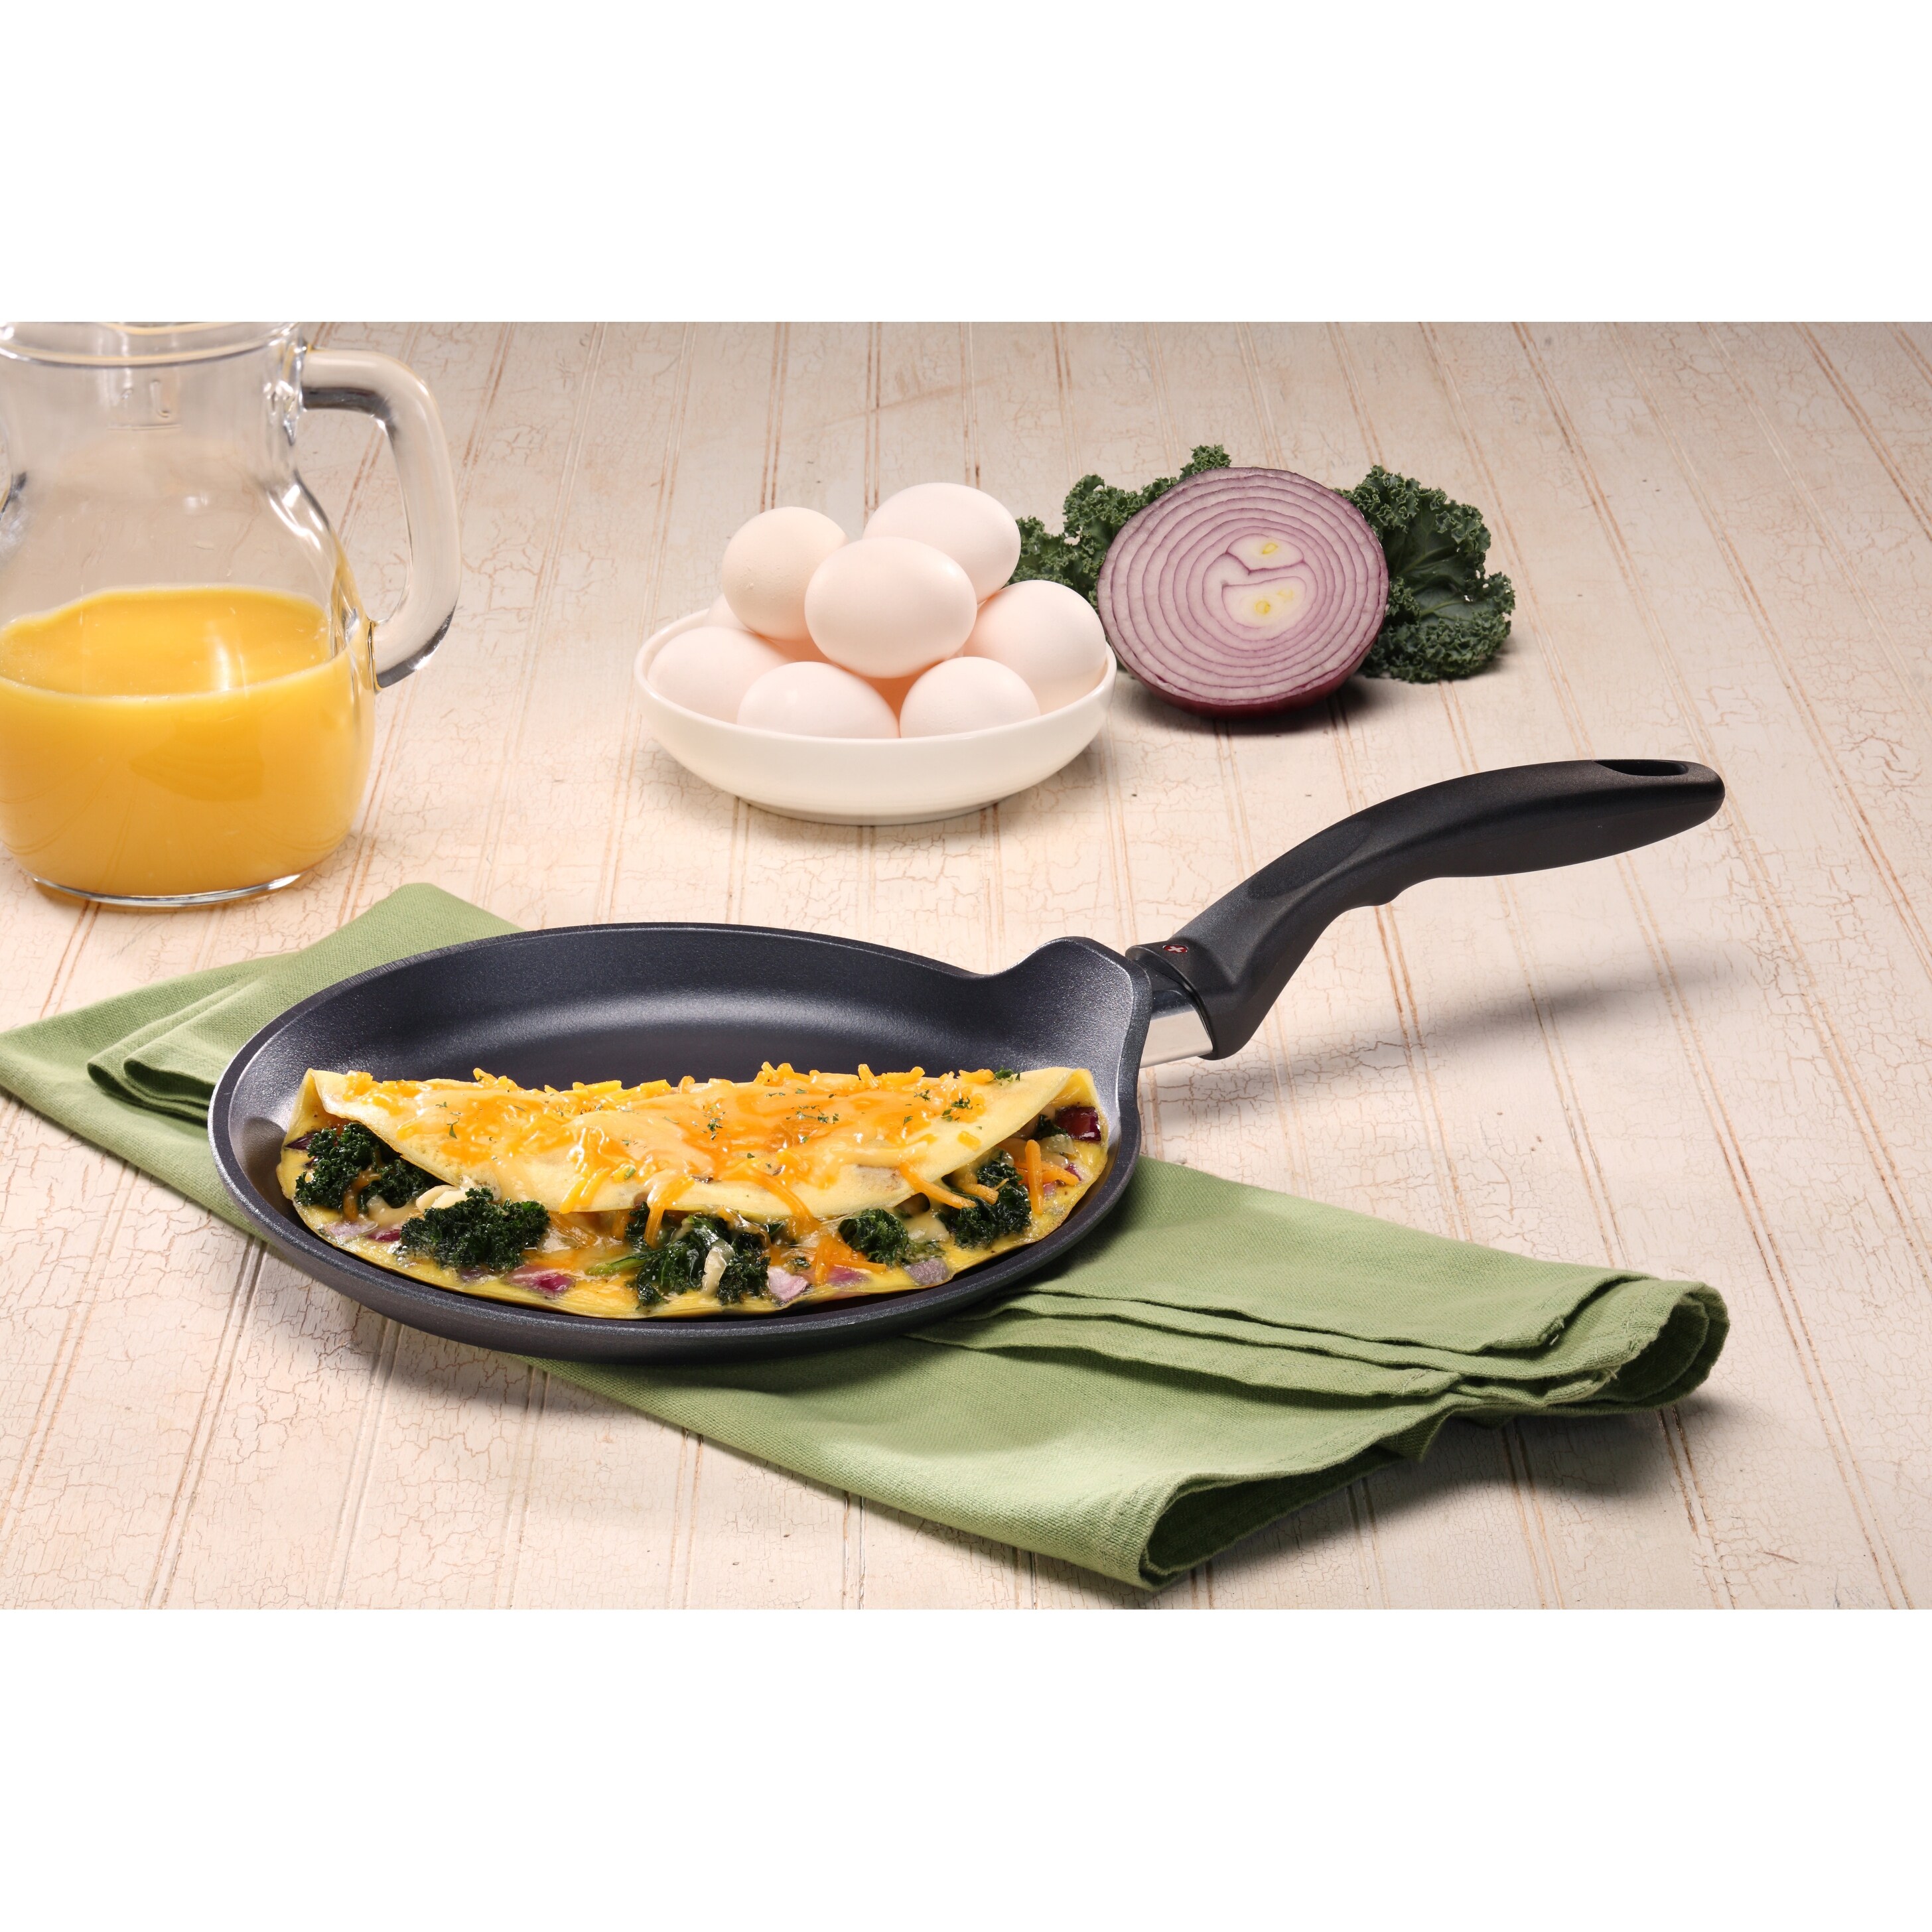 Crafond Non-Stick Crepiere Induction – Perfect Pans